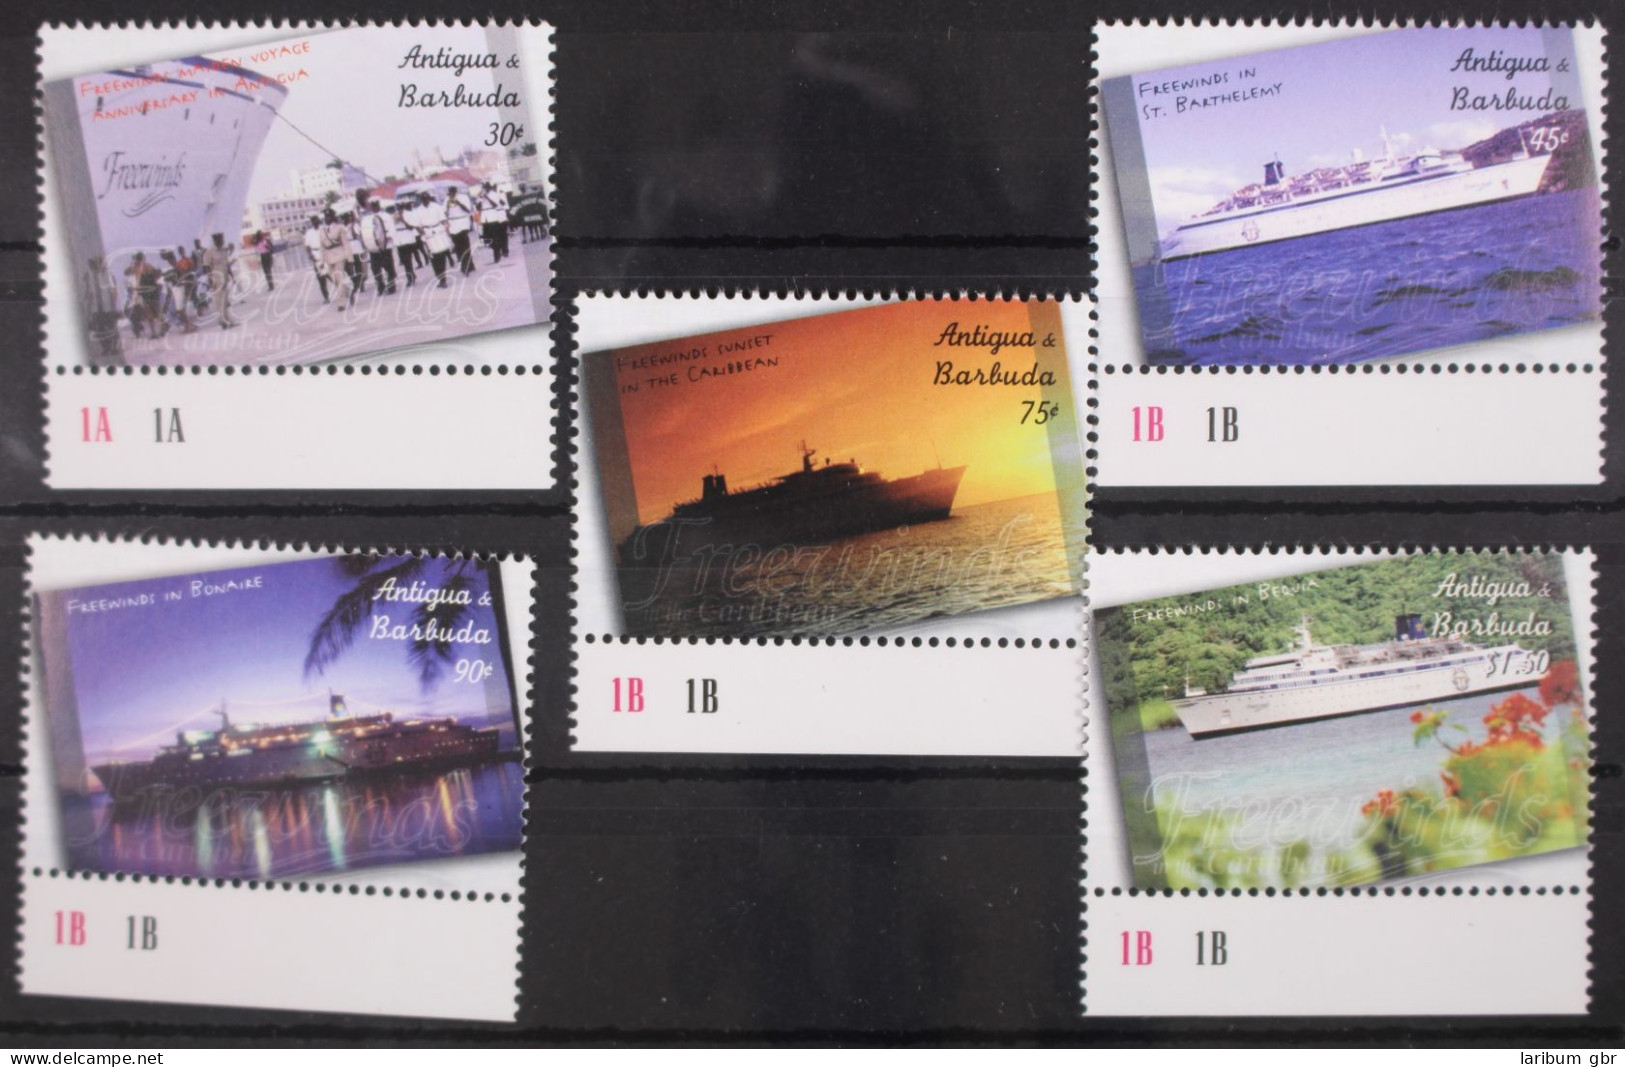 Antigua + Barbuda 3511-3515 Postfrisch Schifffahrt #GA989 - Antigua And Barbuda (1981-...)